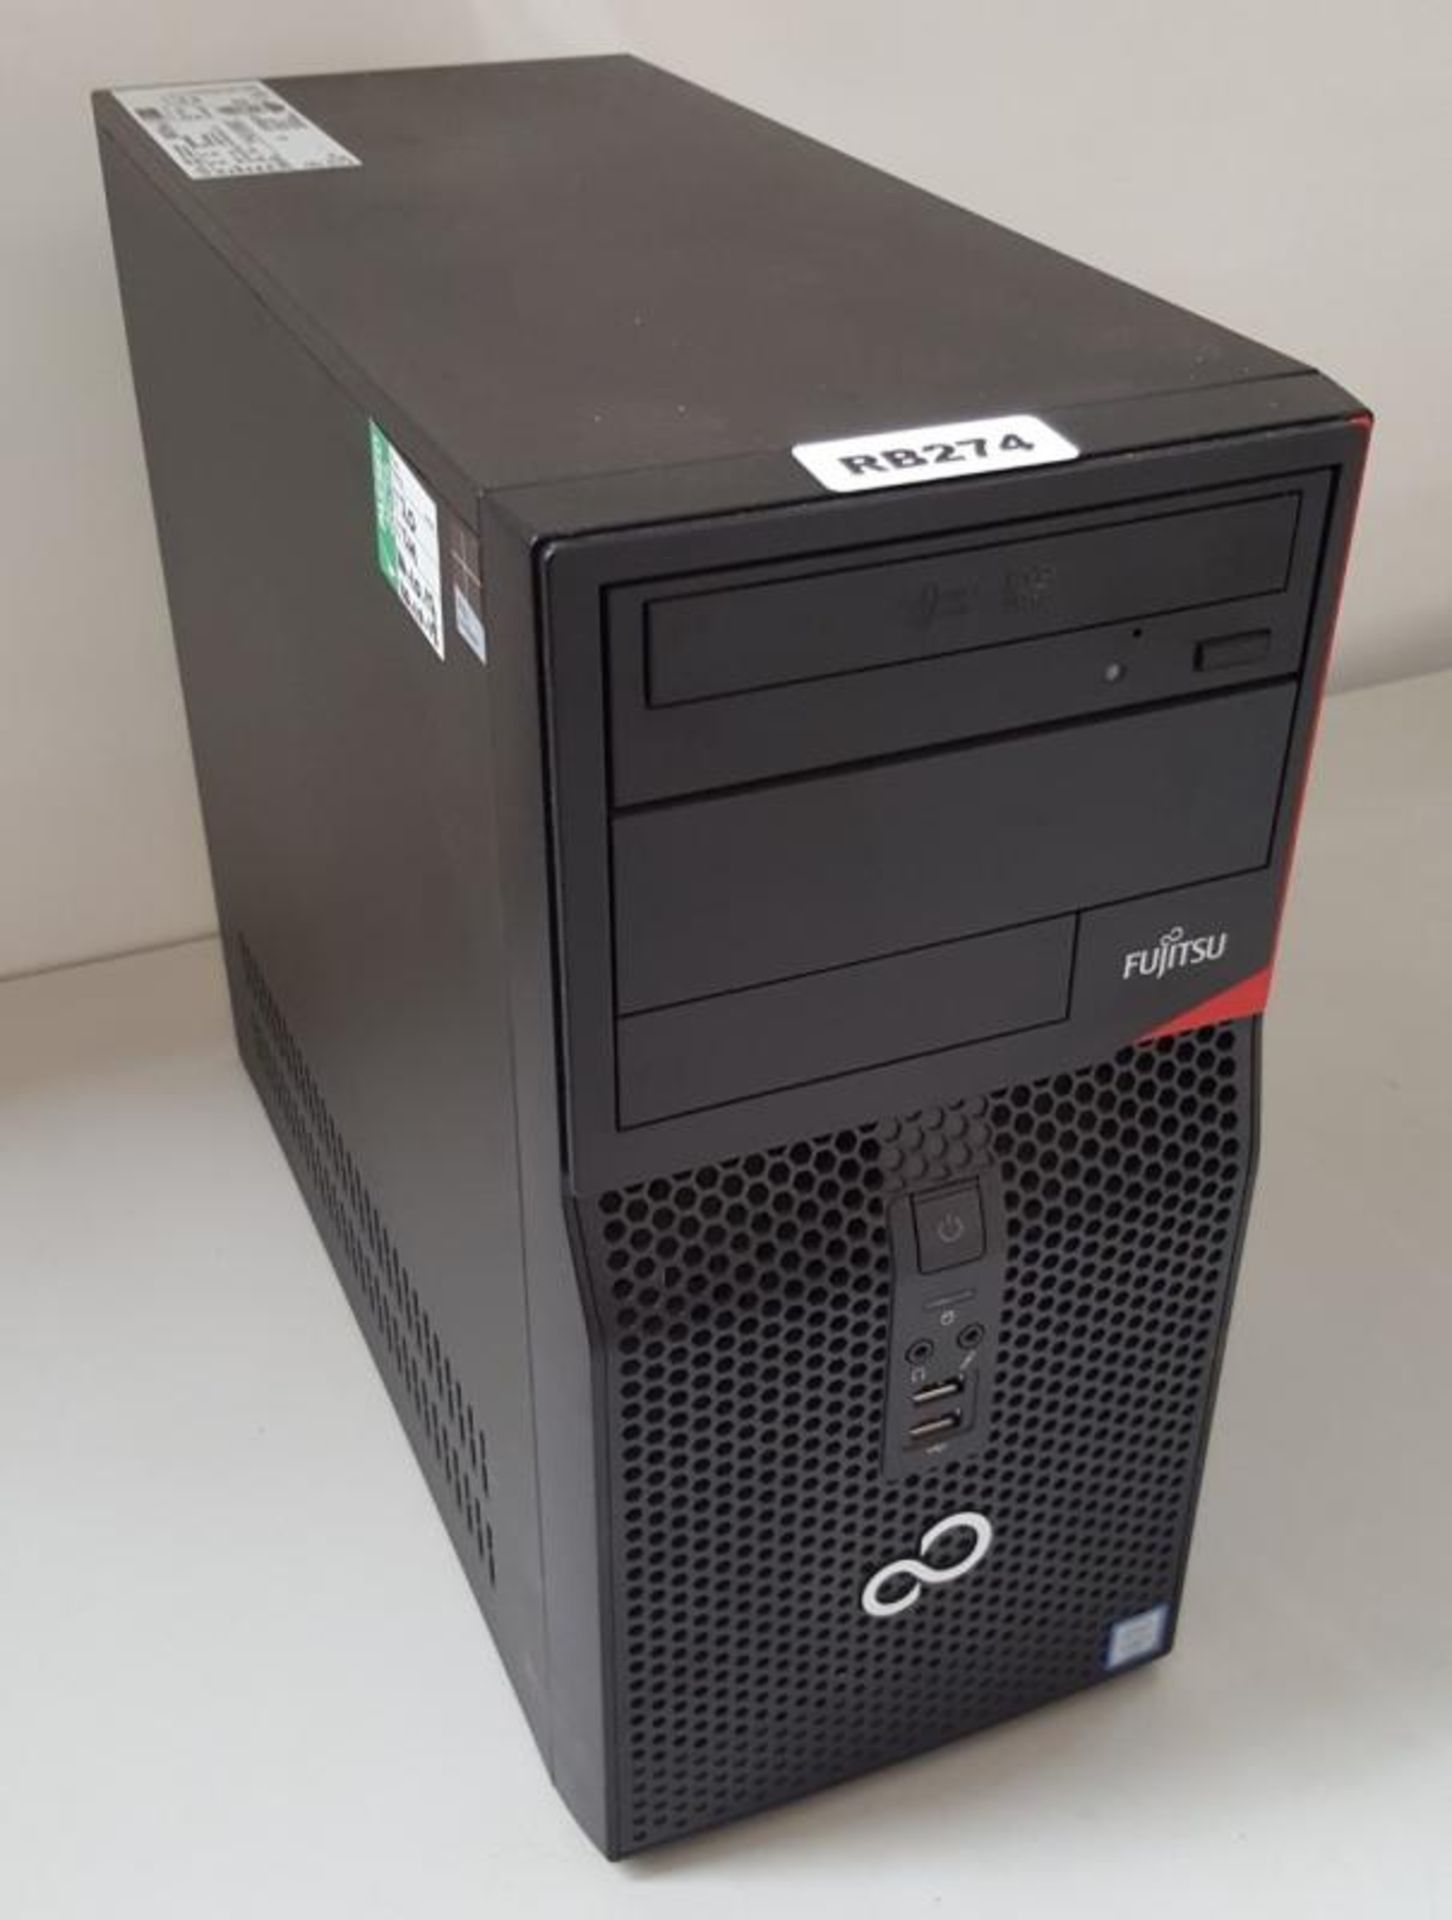 1 x Fujitsu Esprimo P556 E85+ Desktop Computer With Intel Core i3 6100 3.7 GHz 6th Gen Processor, - Image 2 of 5